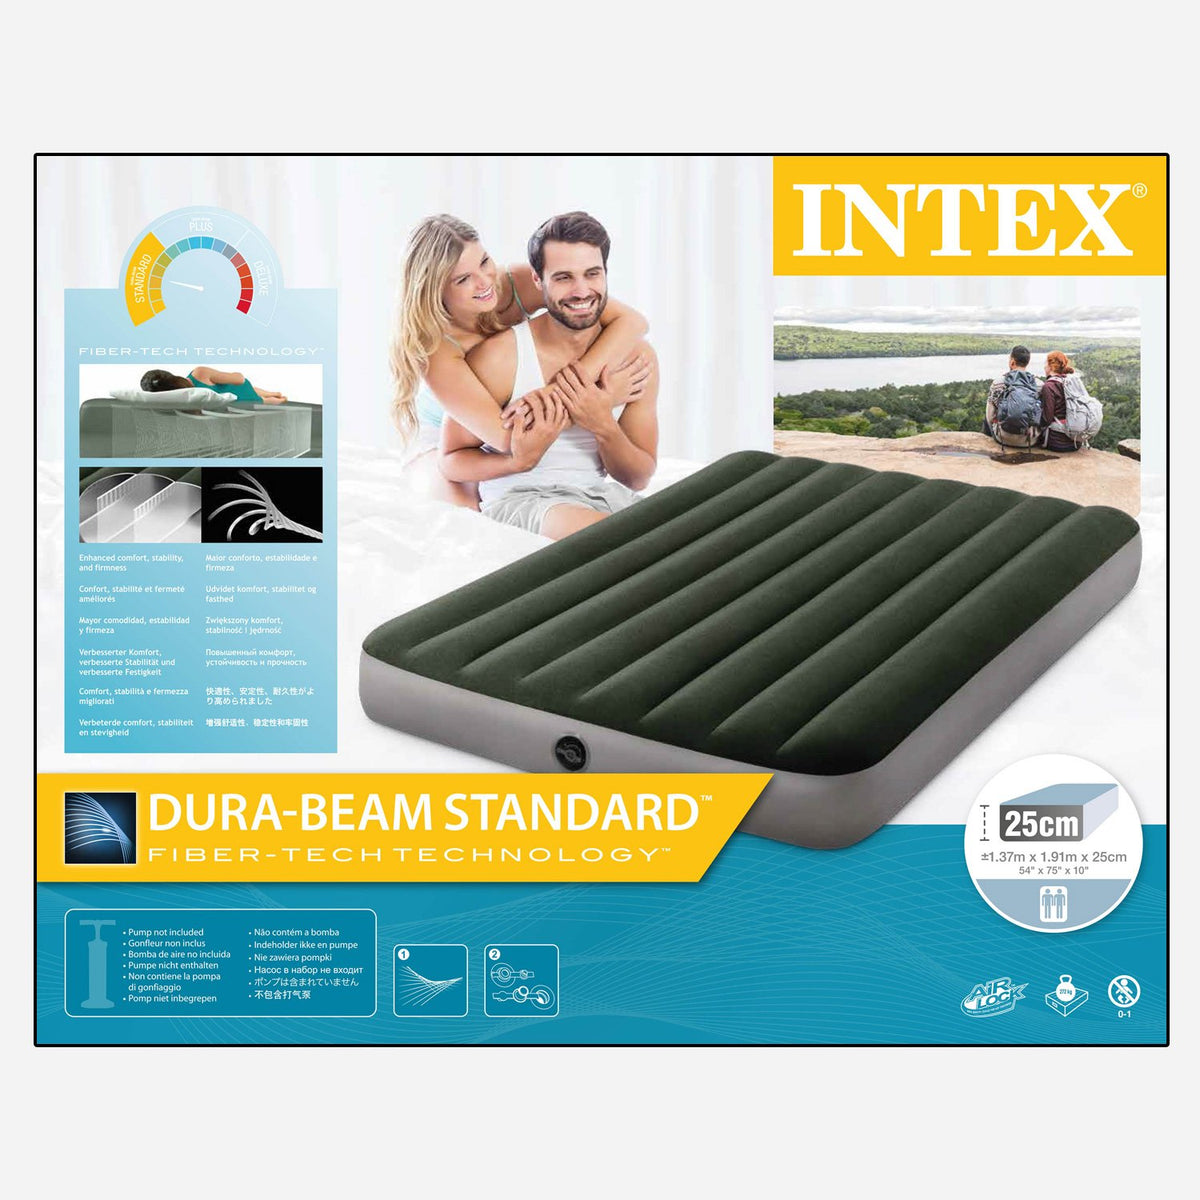 Order Intex full dura-beam standard airbed | The SM Store